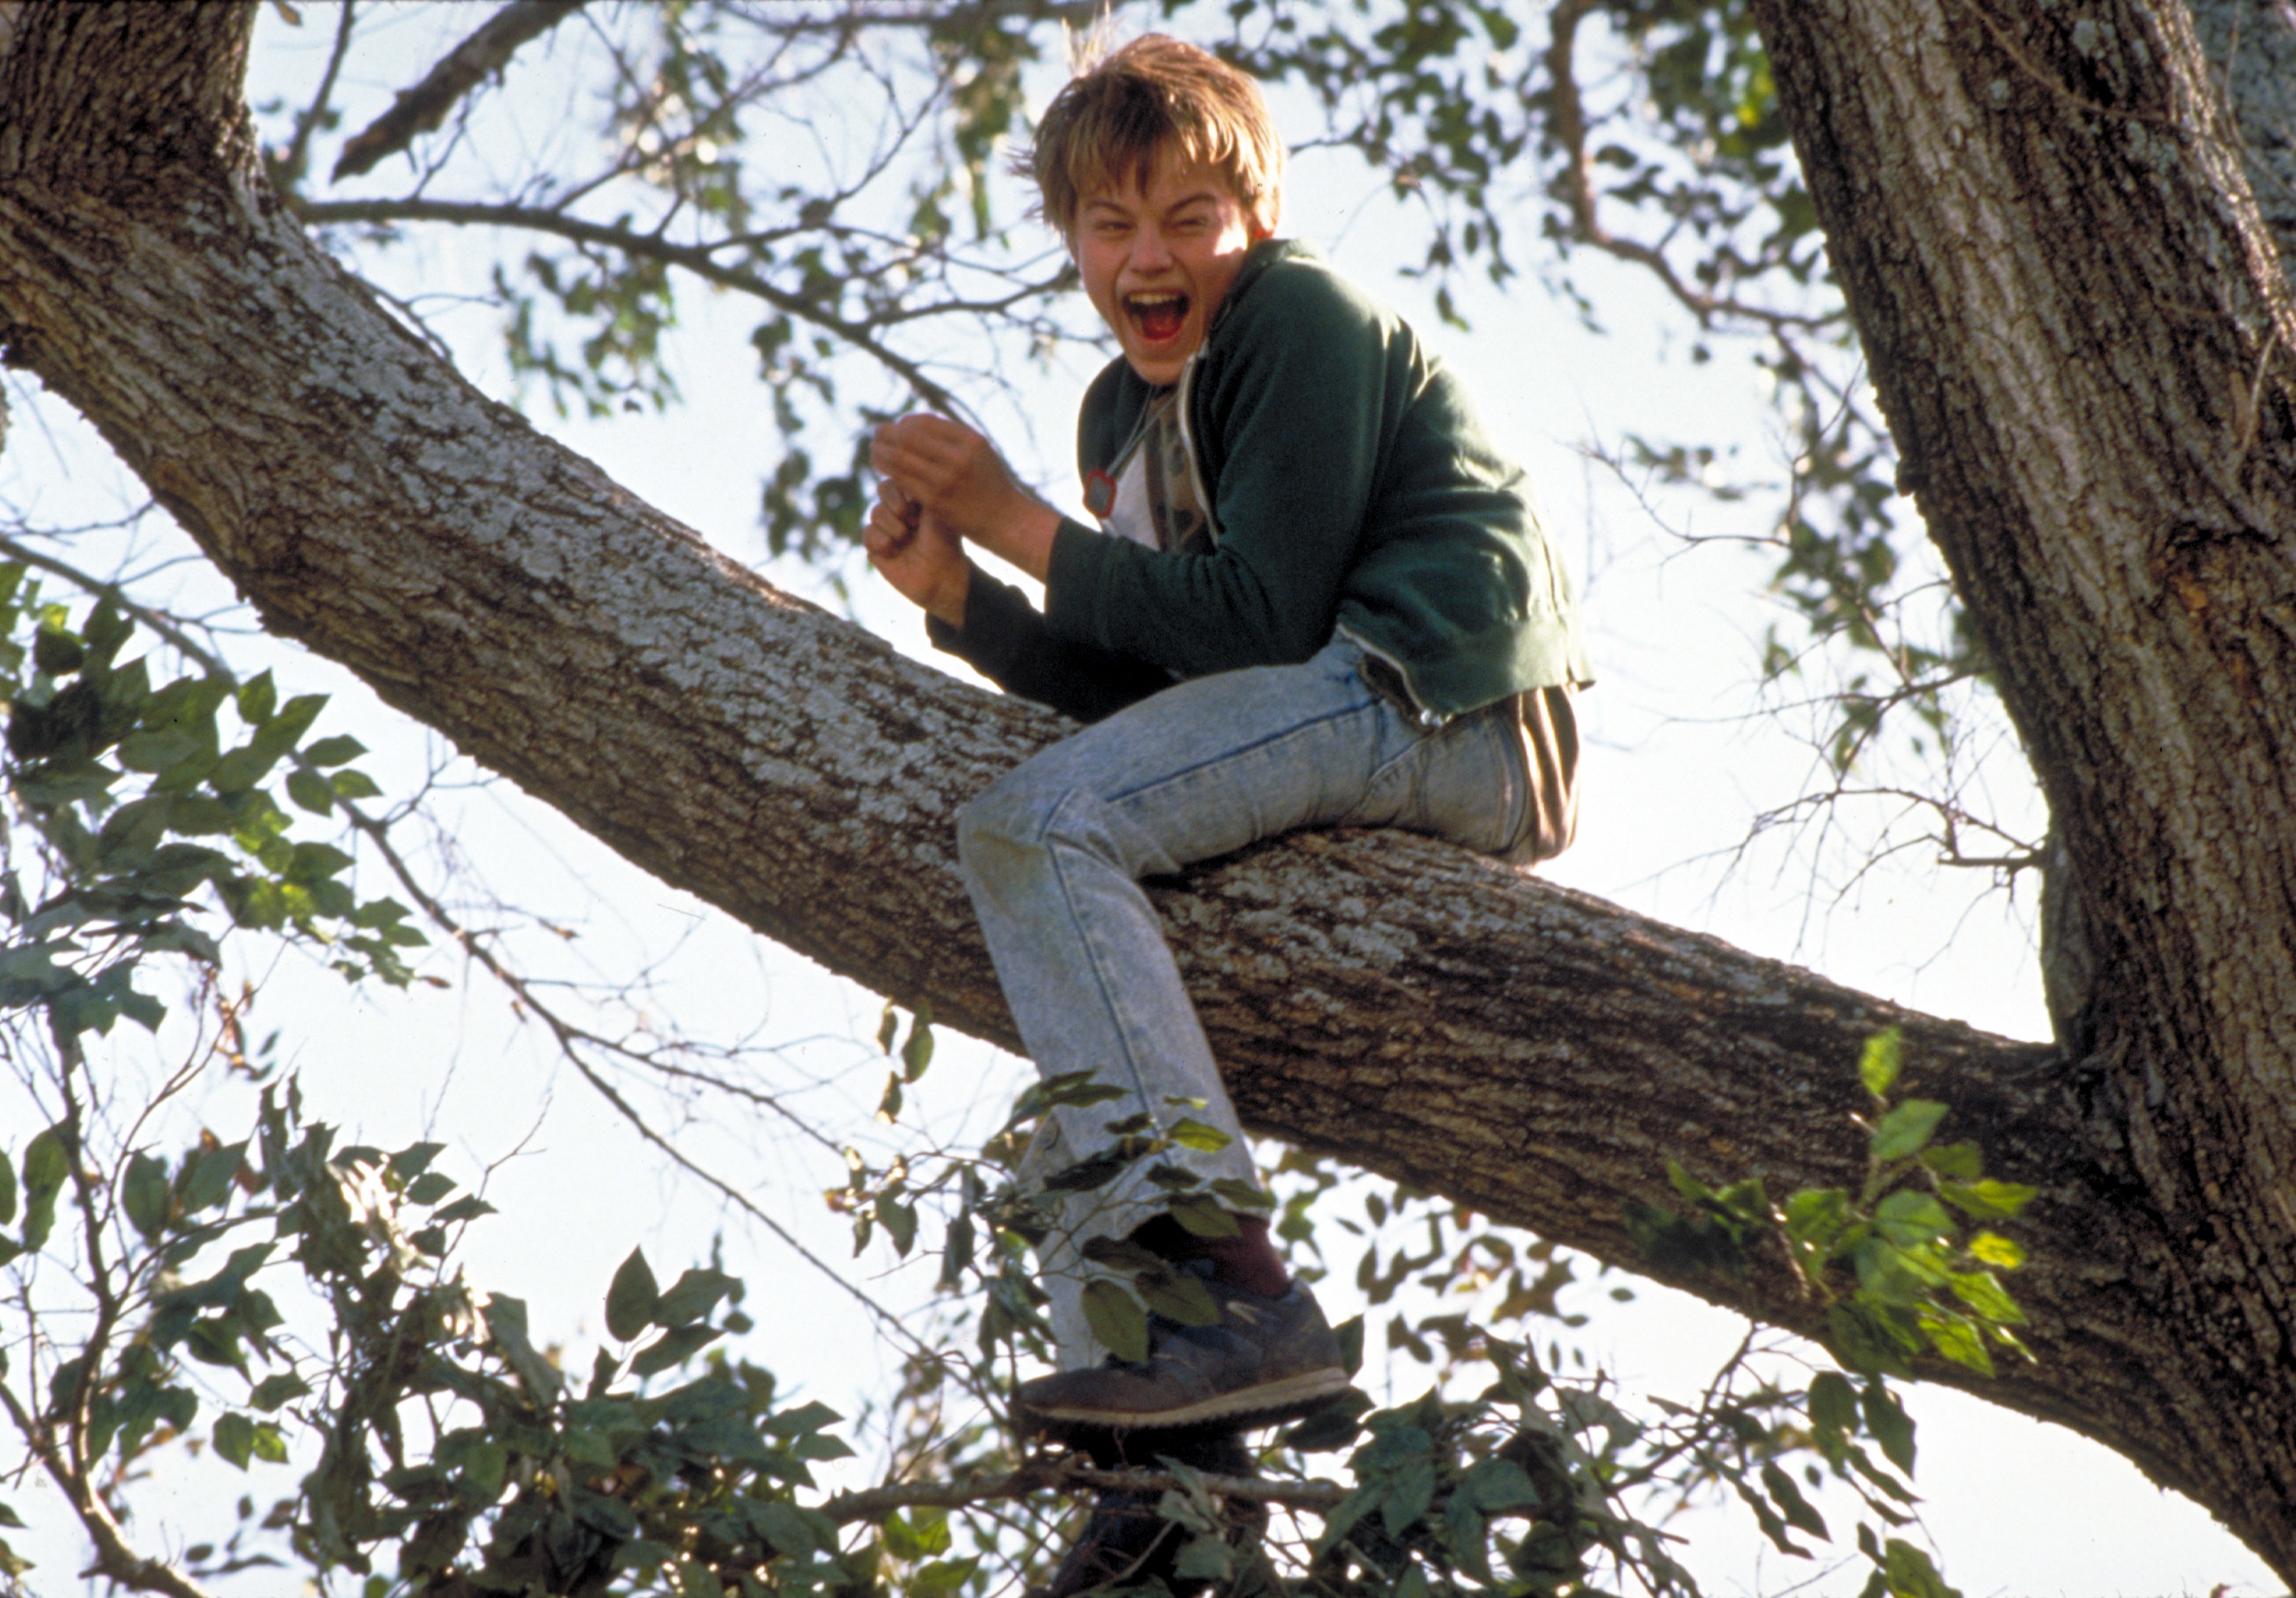 Leonardo DiCaprio screams while sitting in a tree